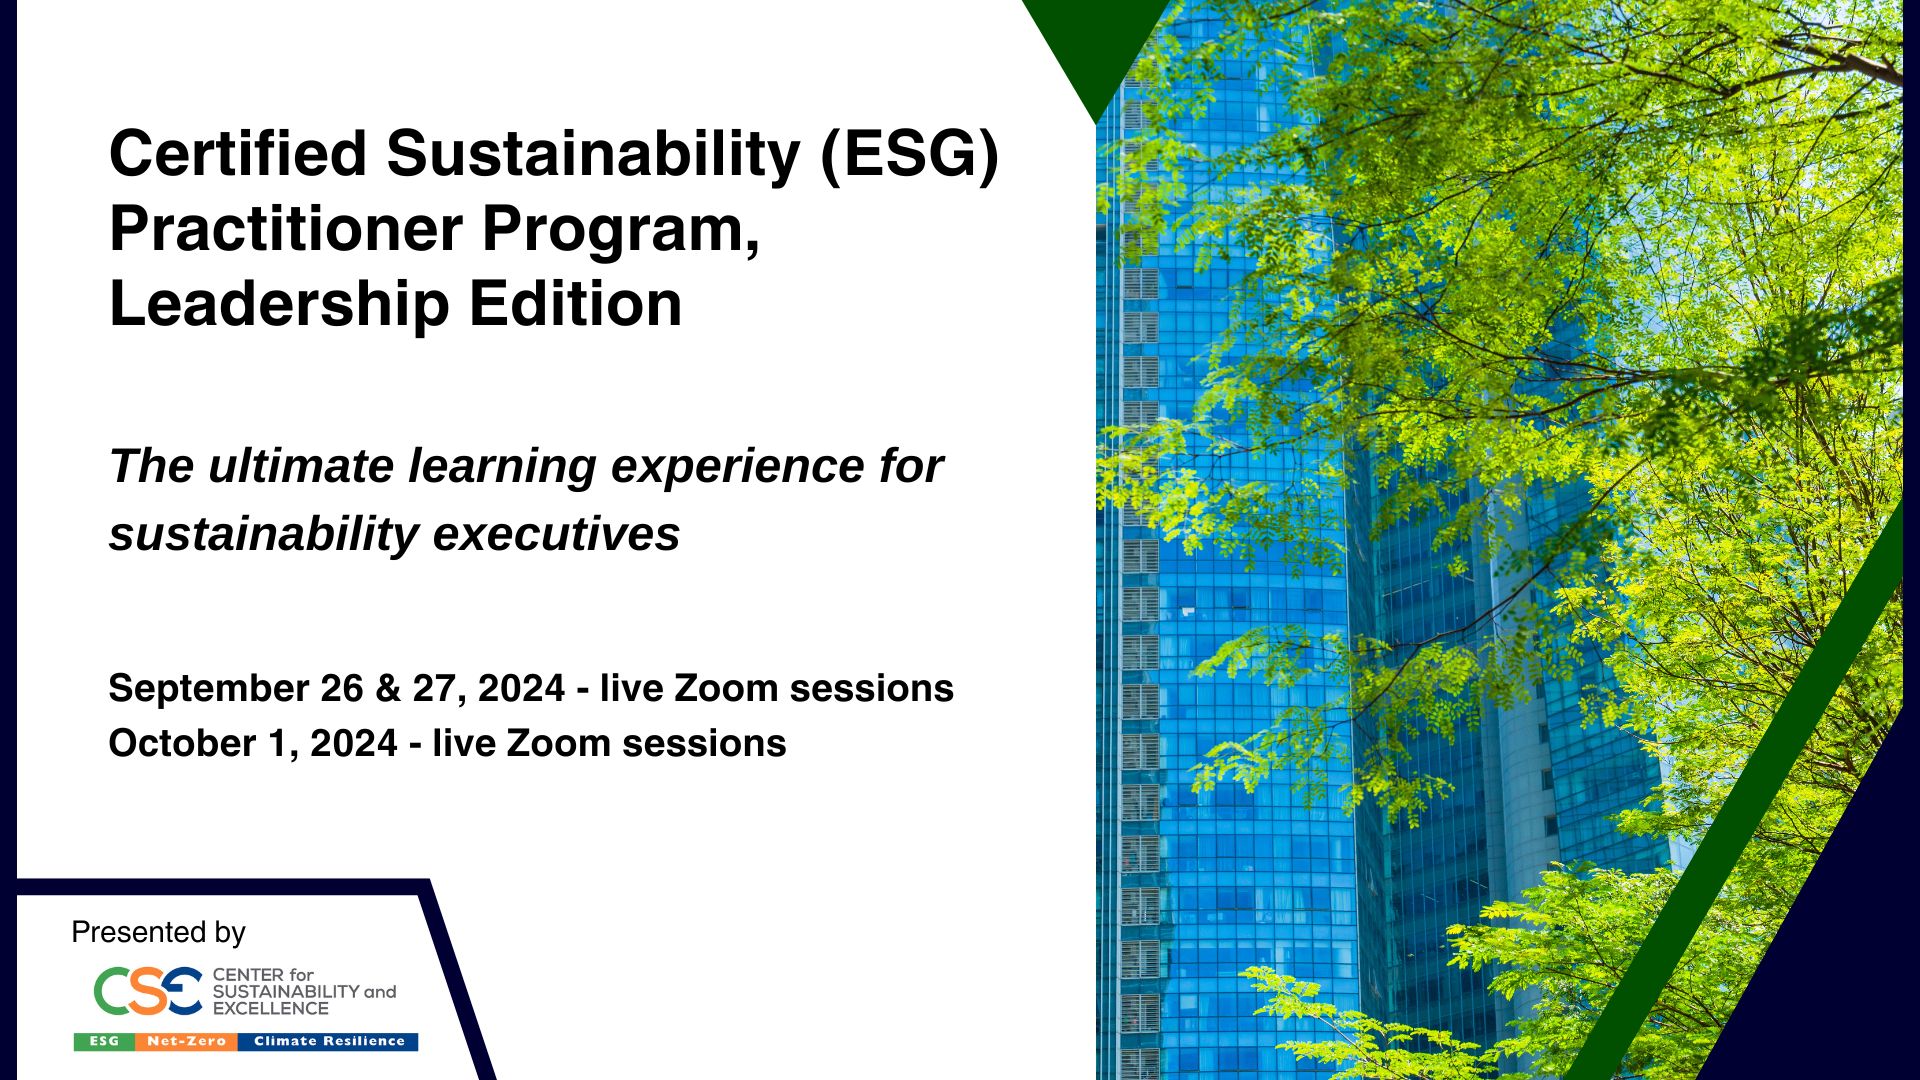 Certified Sustainability (ESG) Practitioner Program, Leadership Edition